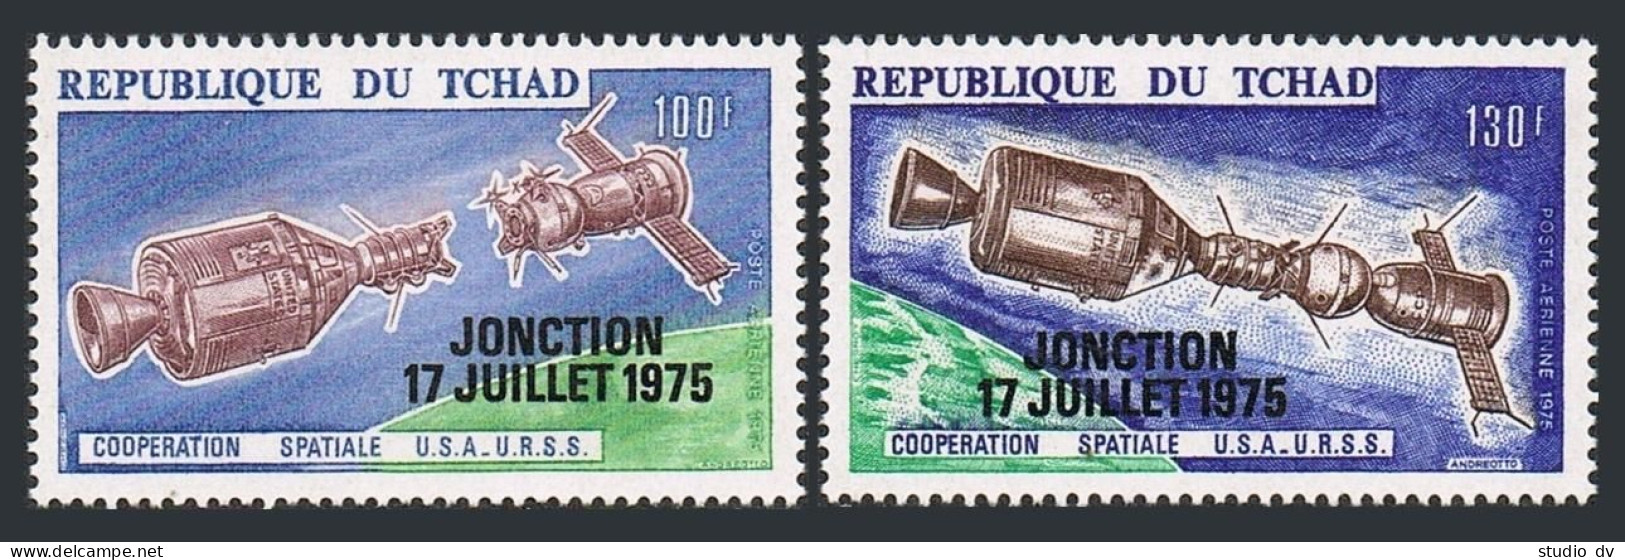 Chad C171-C172, MNH. Michel 722-723. Apollo-Soyuz. JONCTION 17 JULET 1975. - Chad (1960-...)